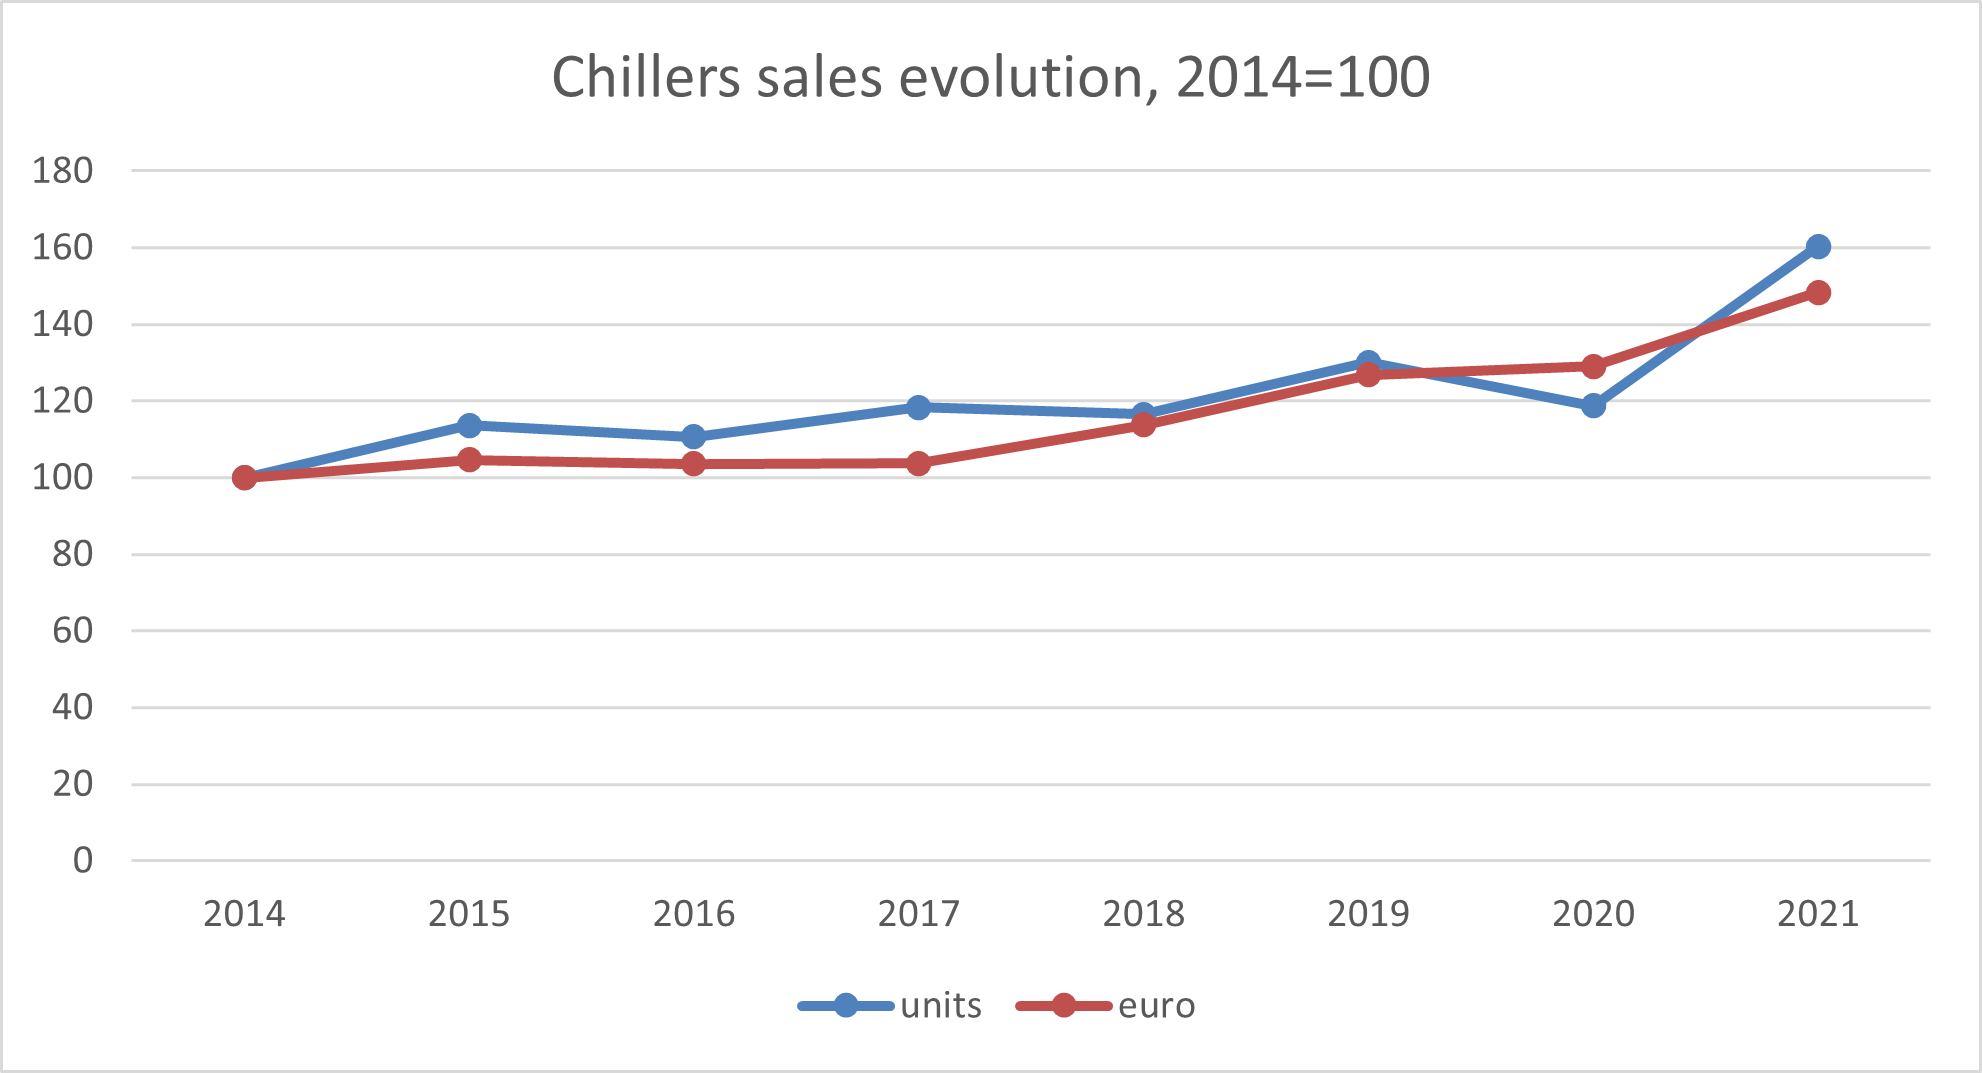 Chiller’s sales evolution, 2014-2021, from Eurovent Market intelligence